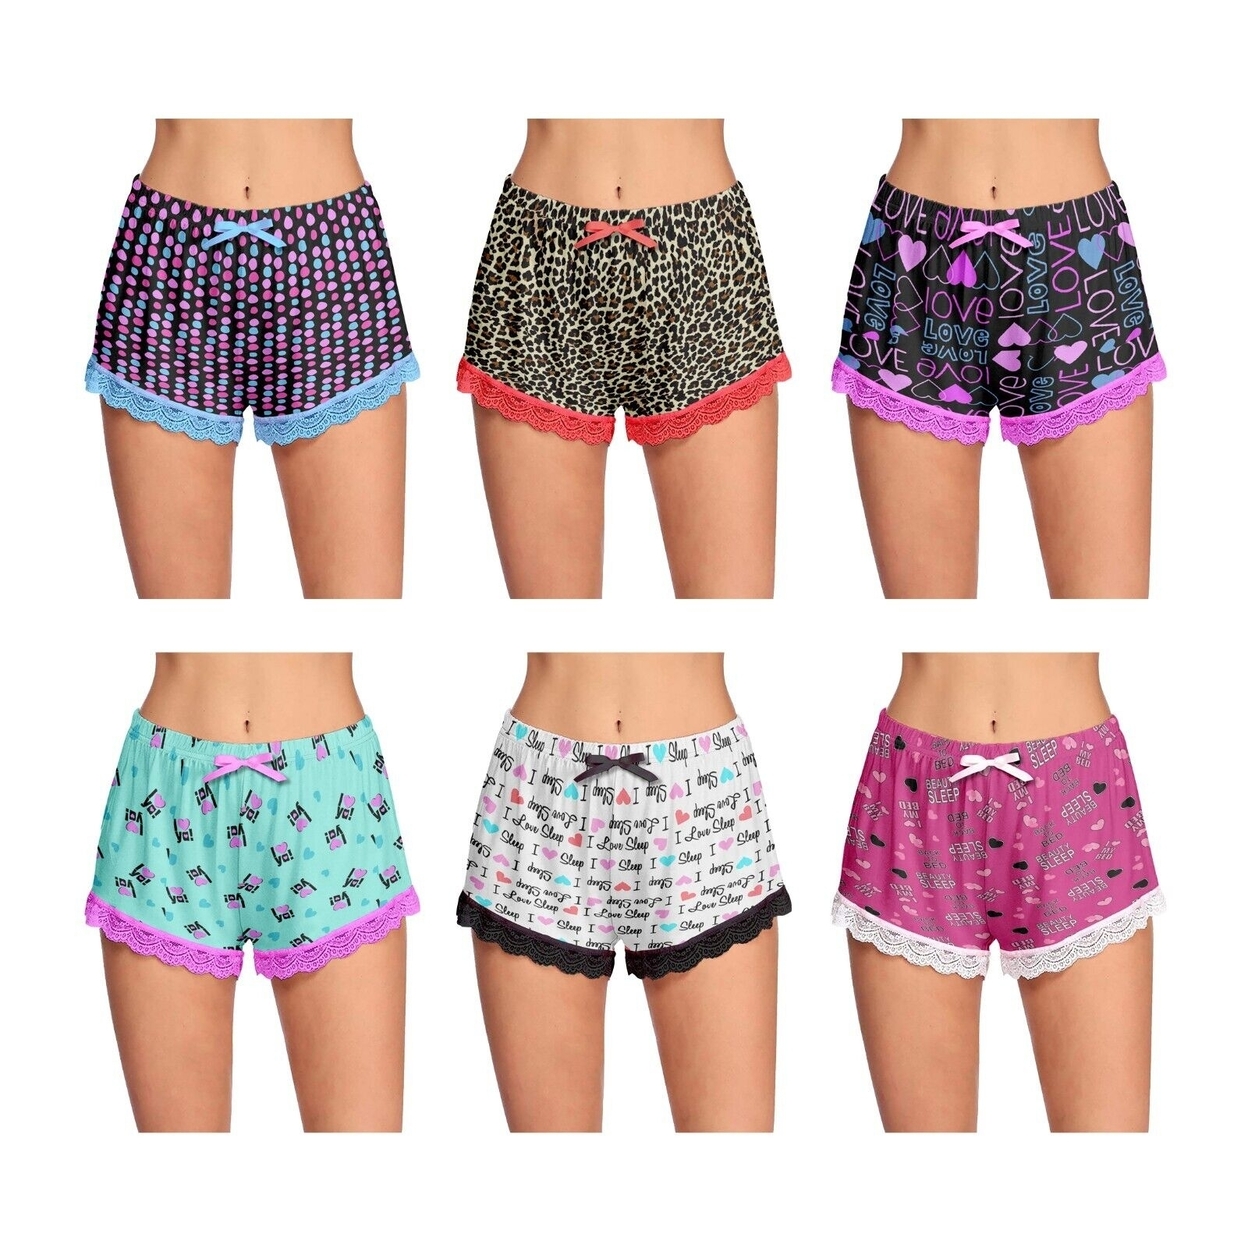 5-Pack: Women's Ultra-Soft Cozy Fun Printed Lace Trim Pajama Lounge Shorts - Medium, Animal